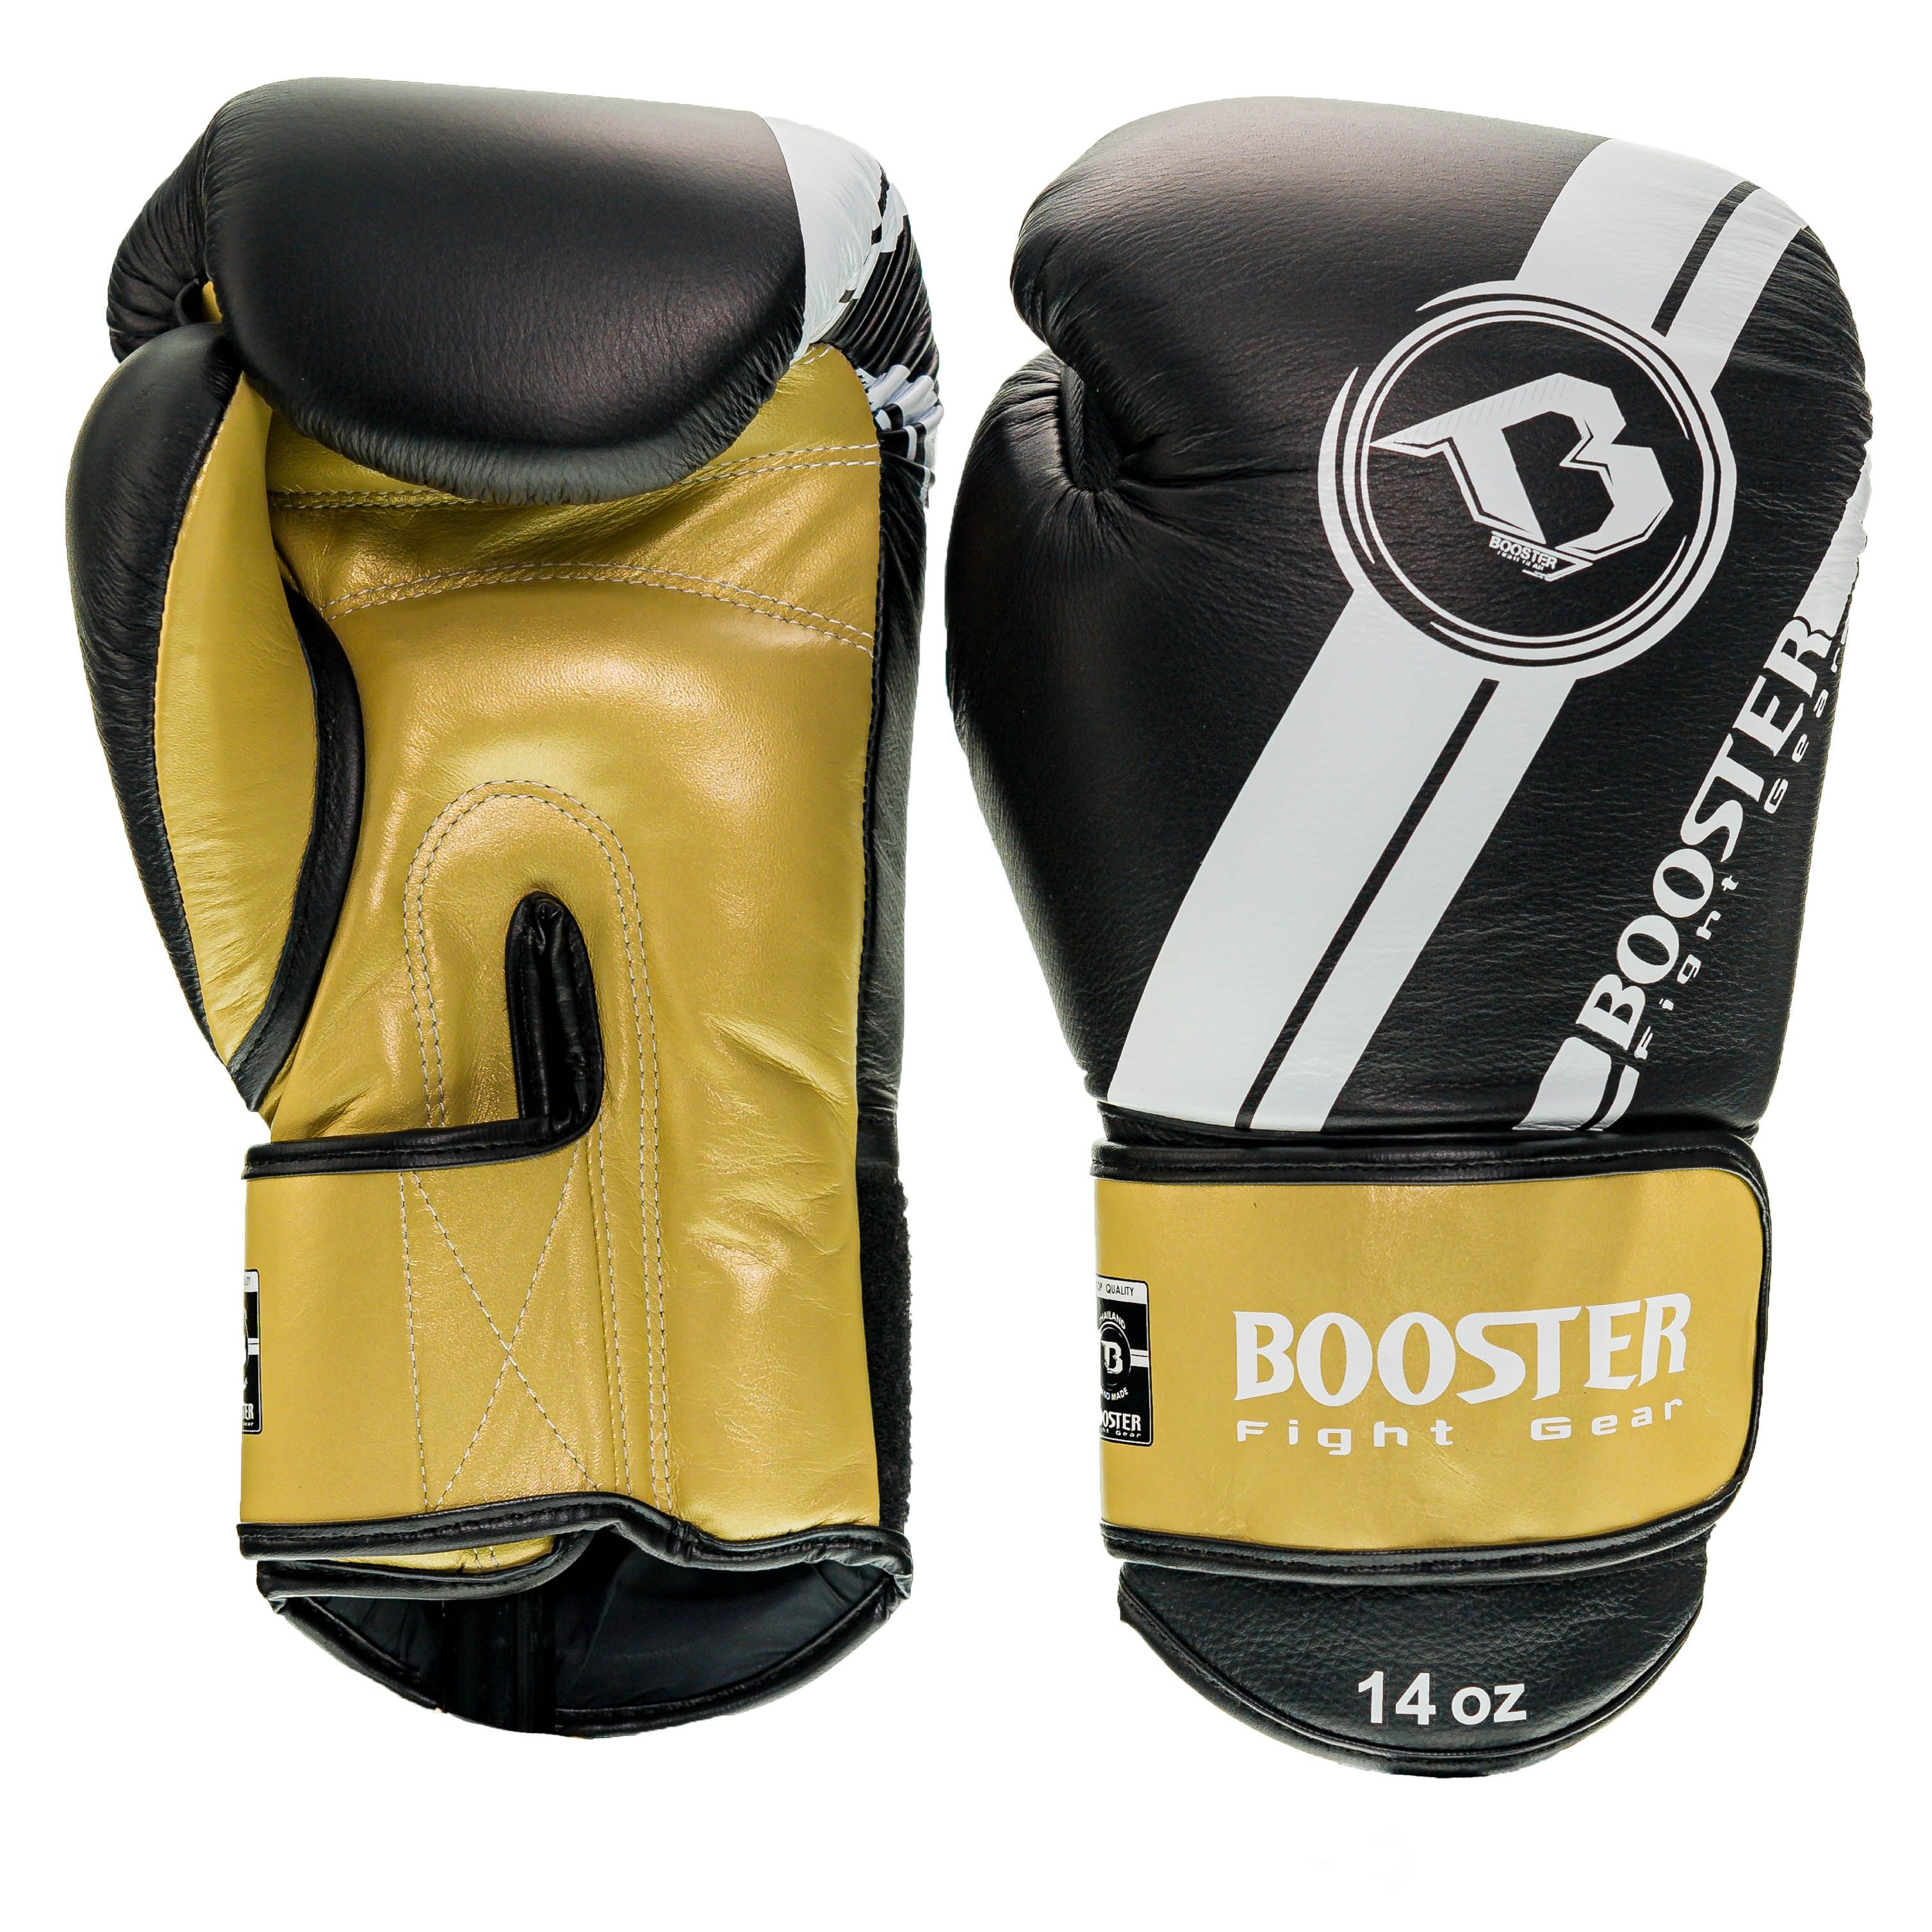 Booster Fightgear - Bokshandschoenen - V3 - Goud - Zwart - GOLD - BLACK